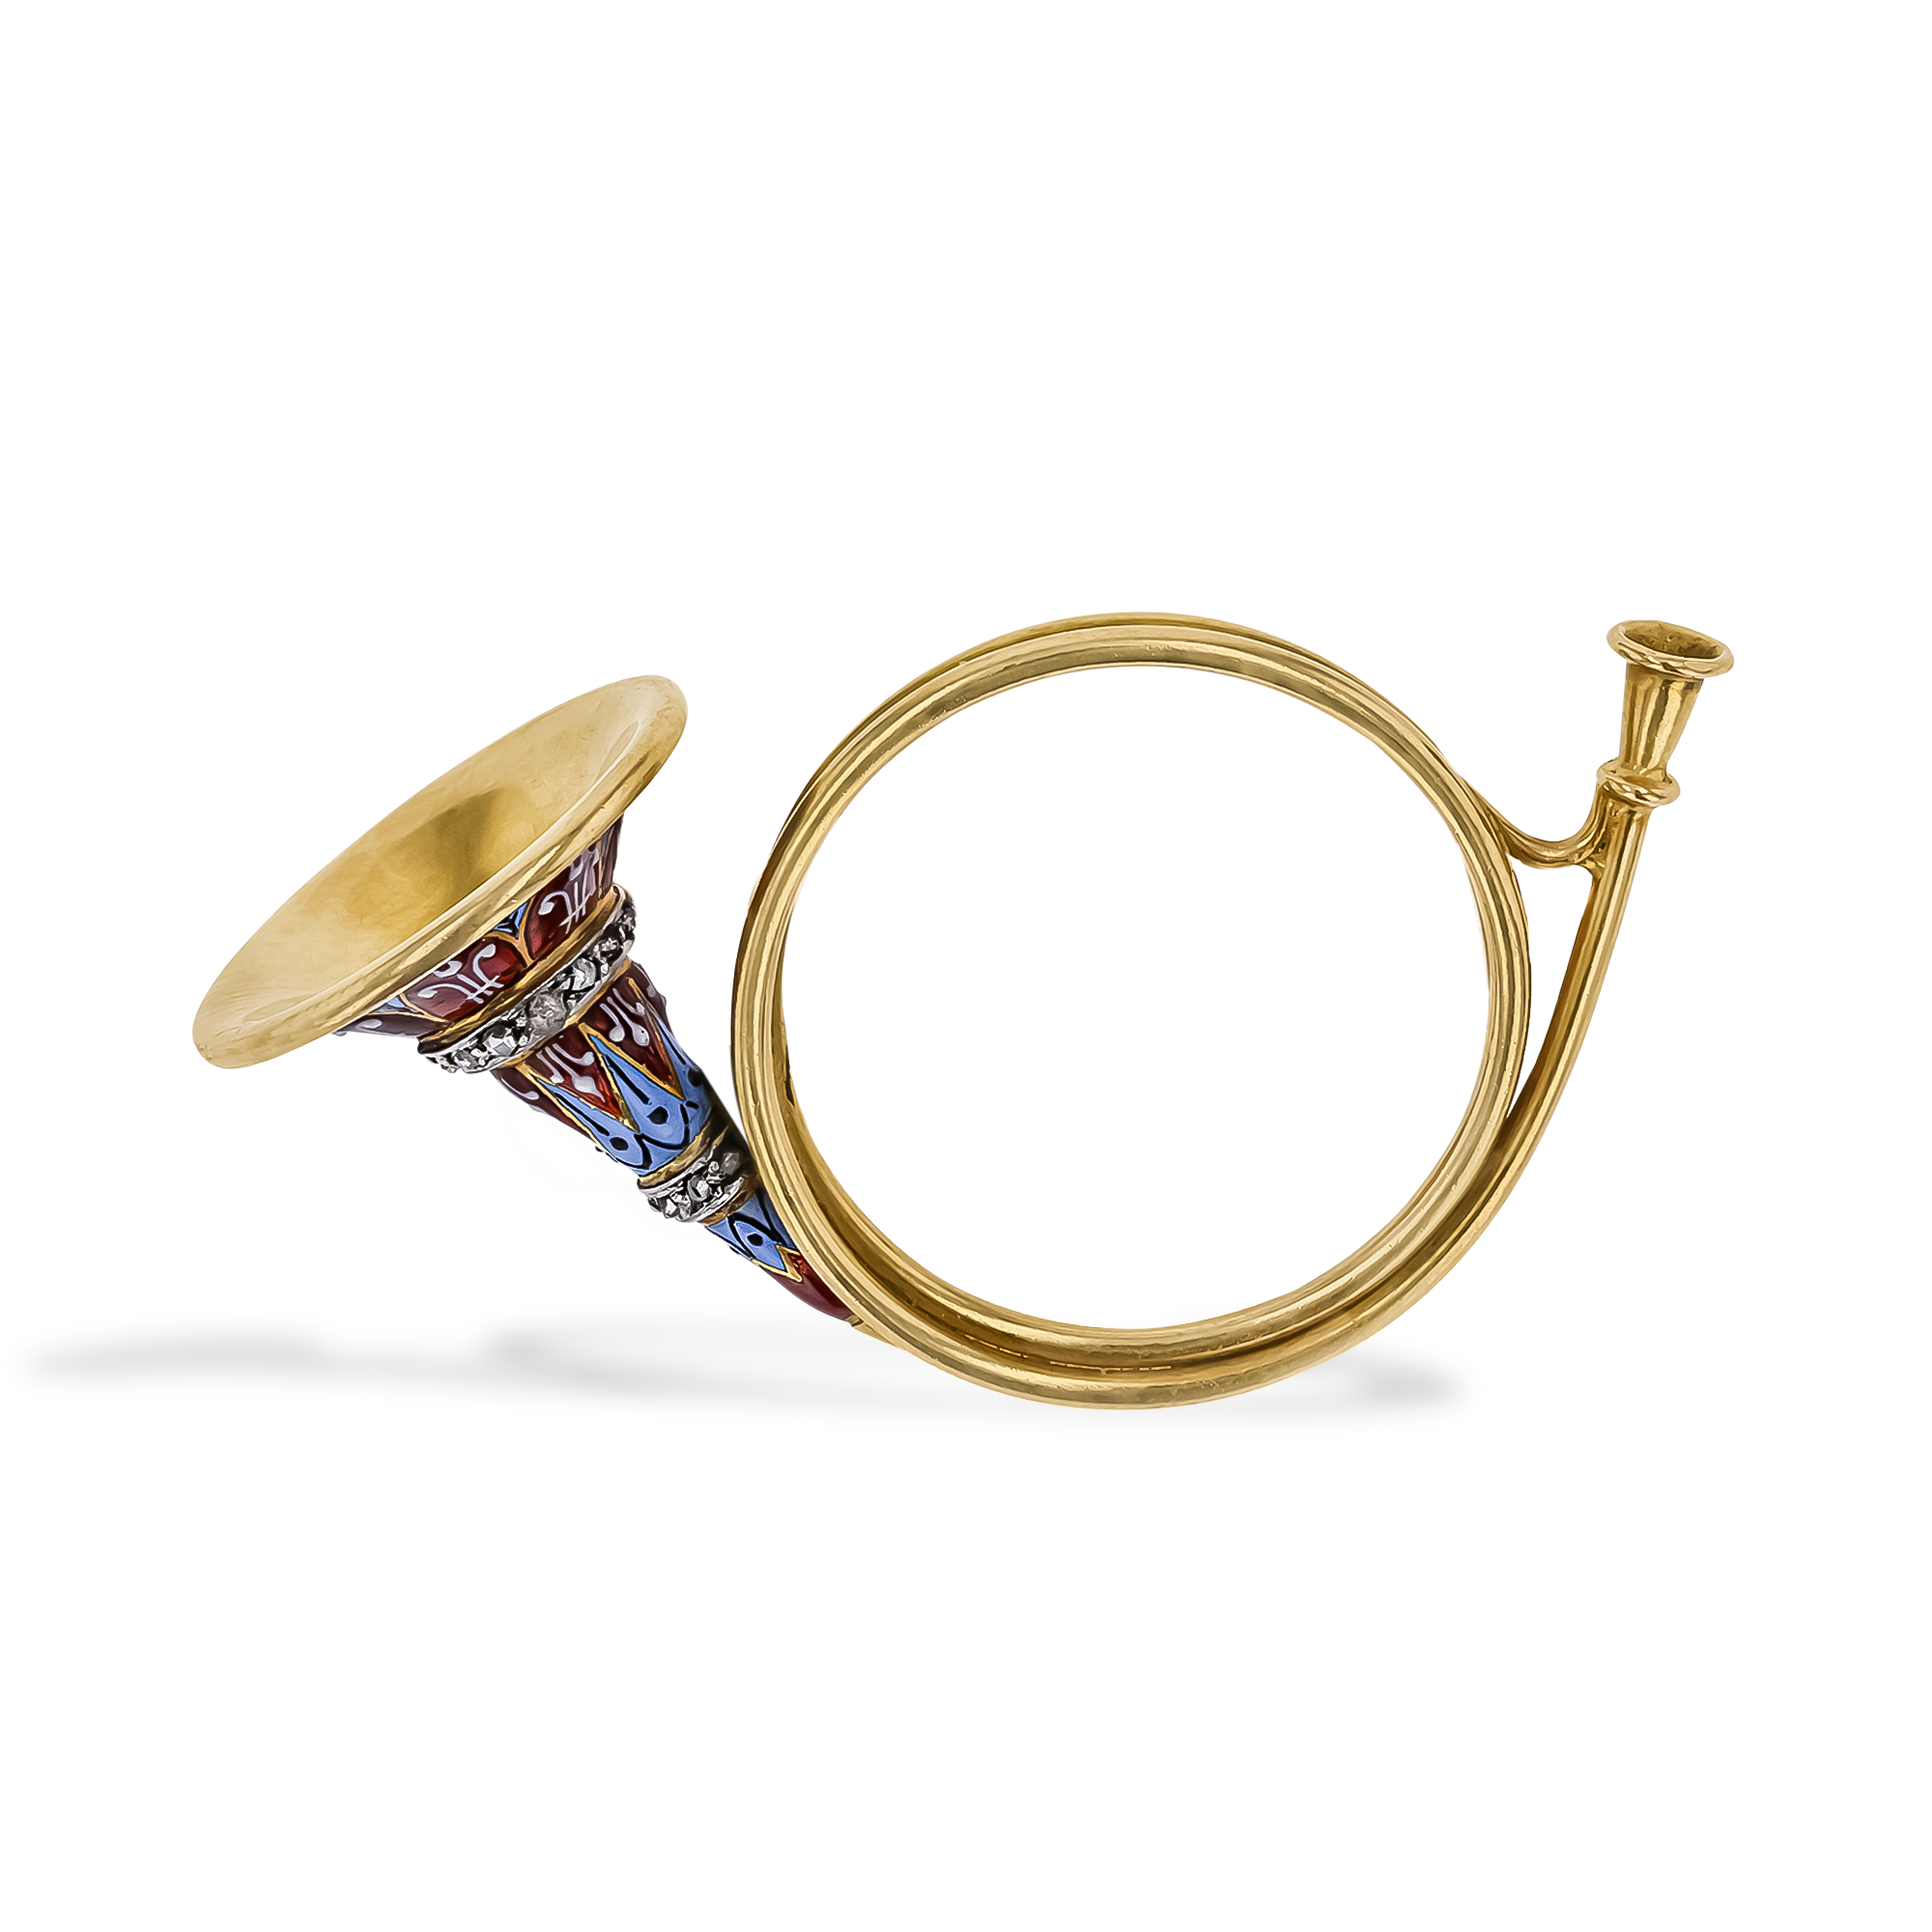 Late 19th-Century European Enamel & Diamond Hunting Horn Brooch Old Cut, Grain Set_1